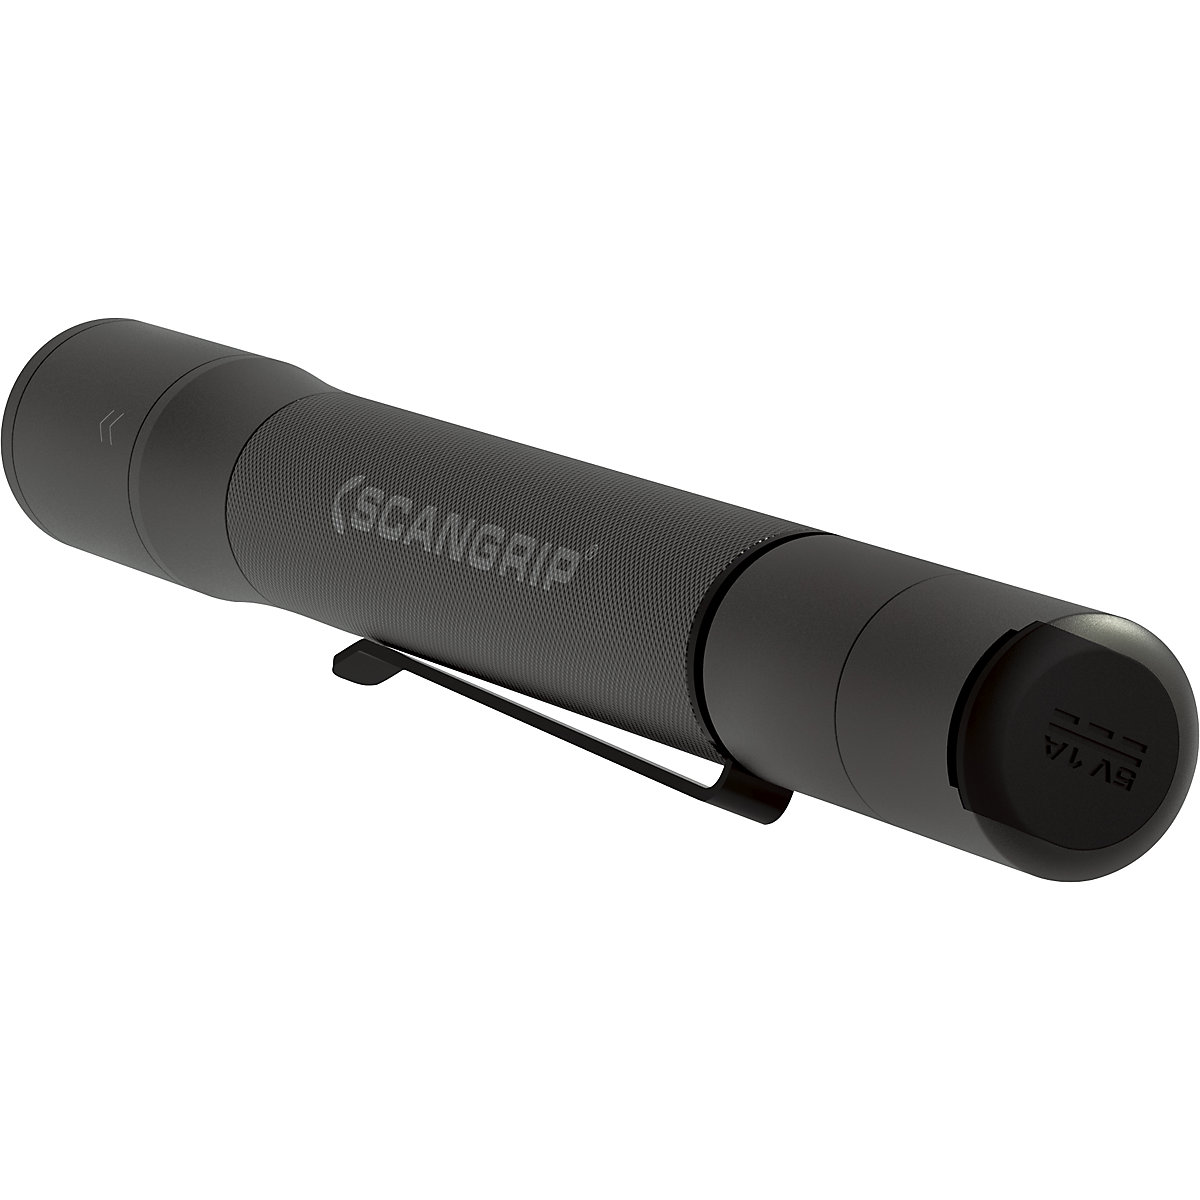 Akumulatorowa latarka długopisowa LED FLASH PEN R – SCANGRIP (Zdjęcie produktu 10)-9